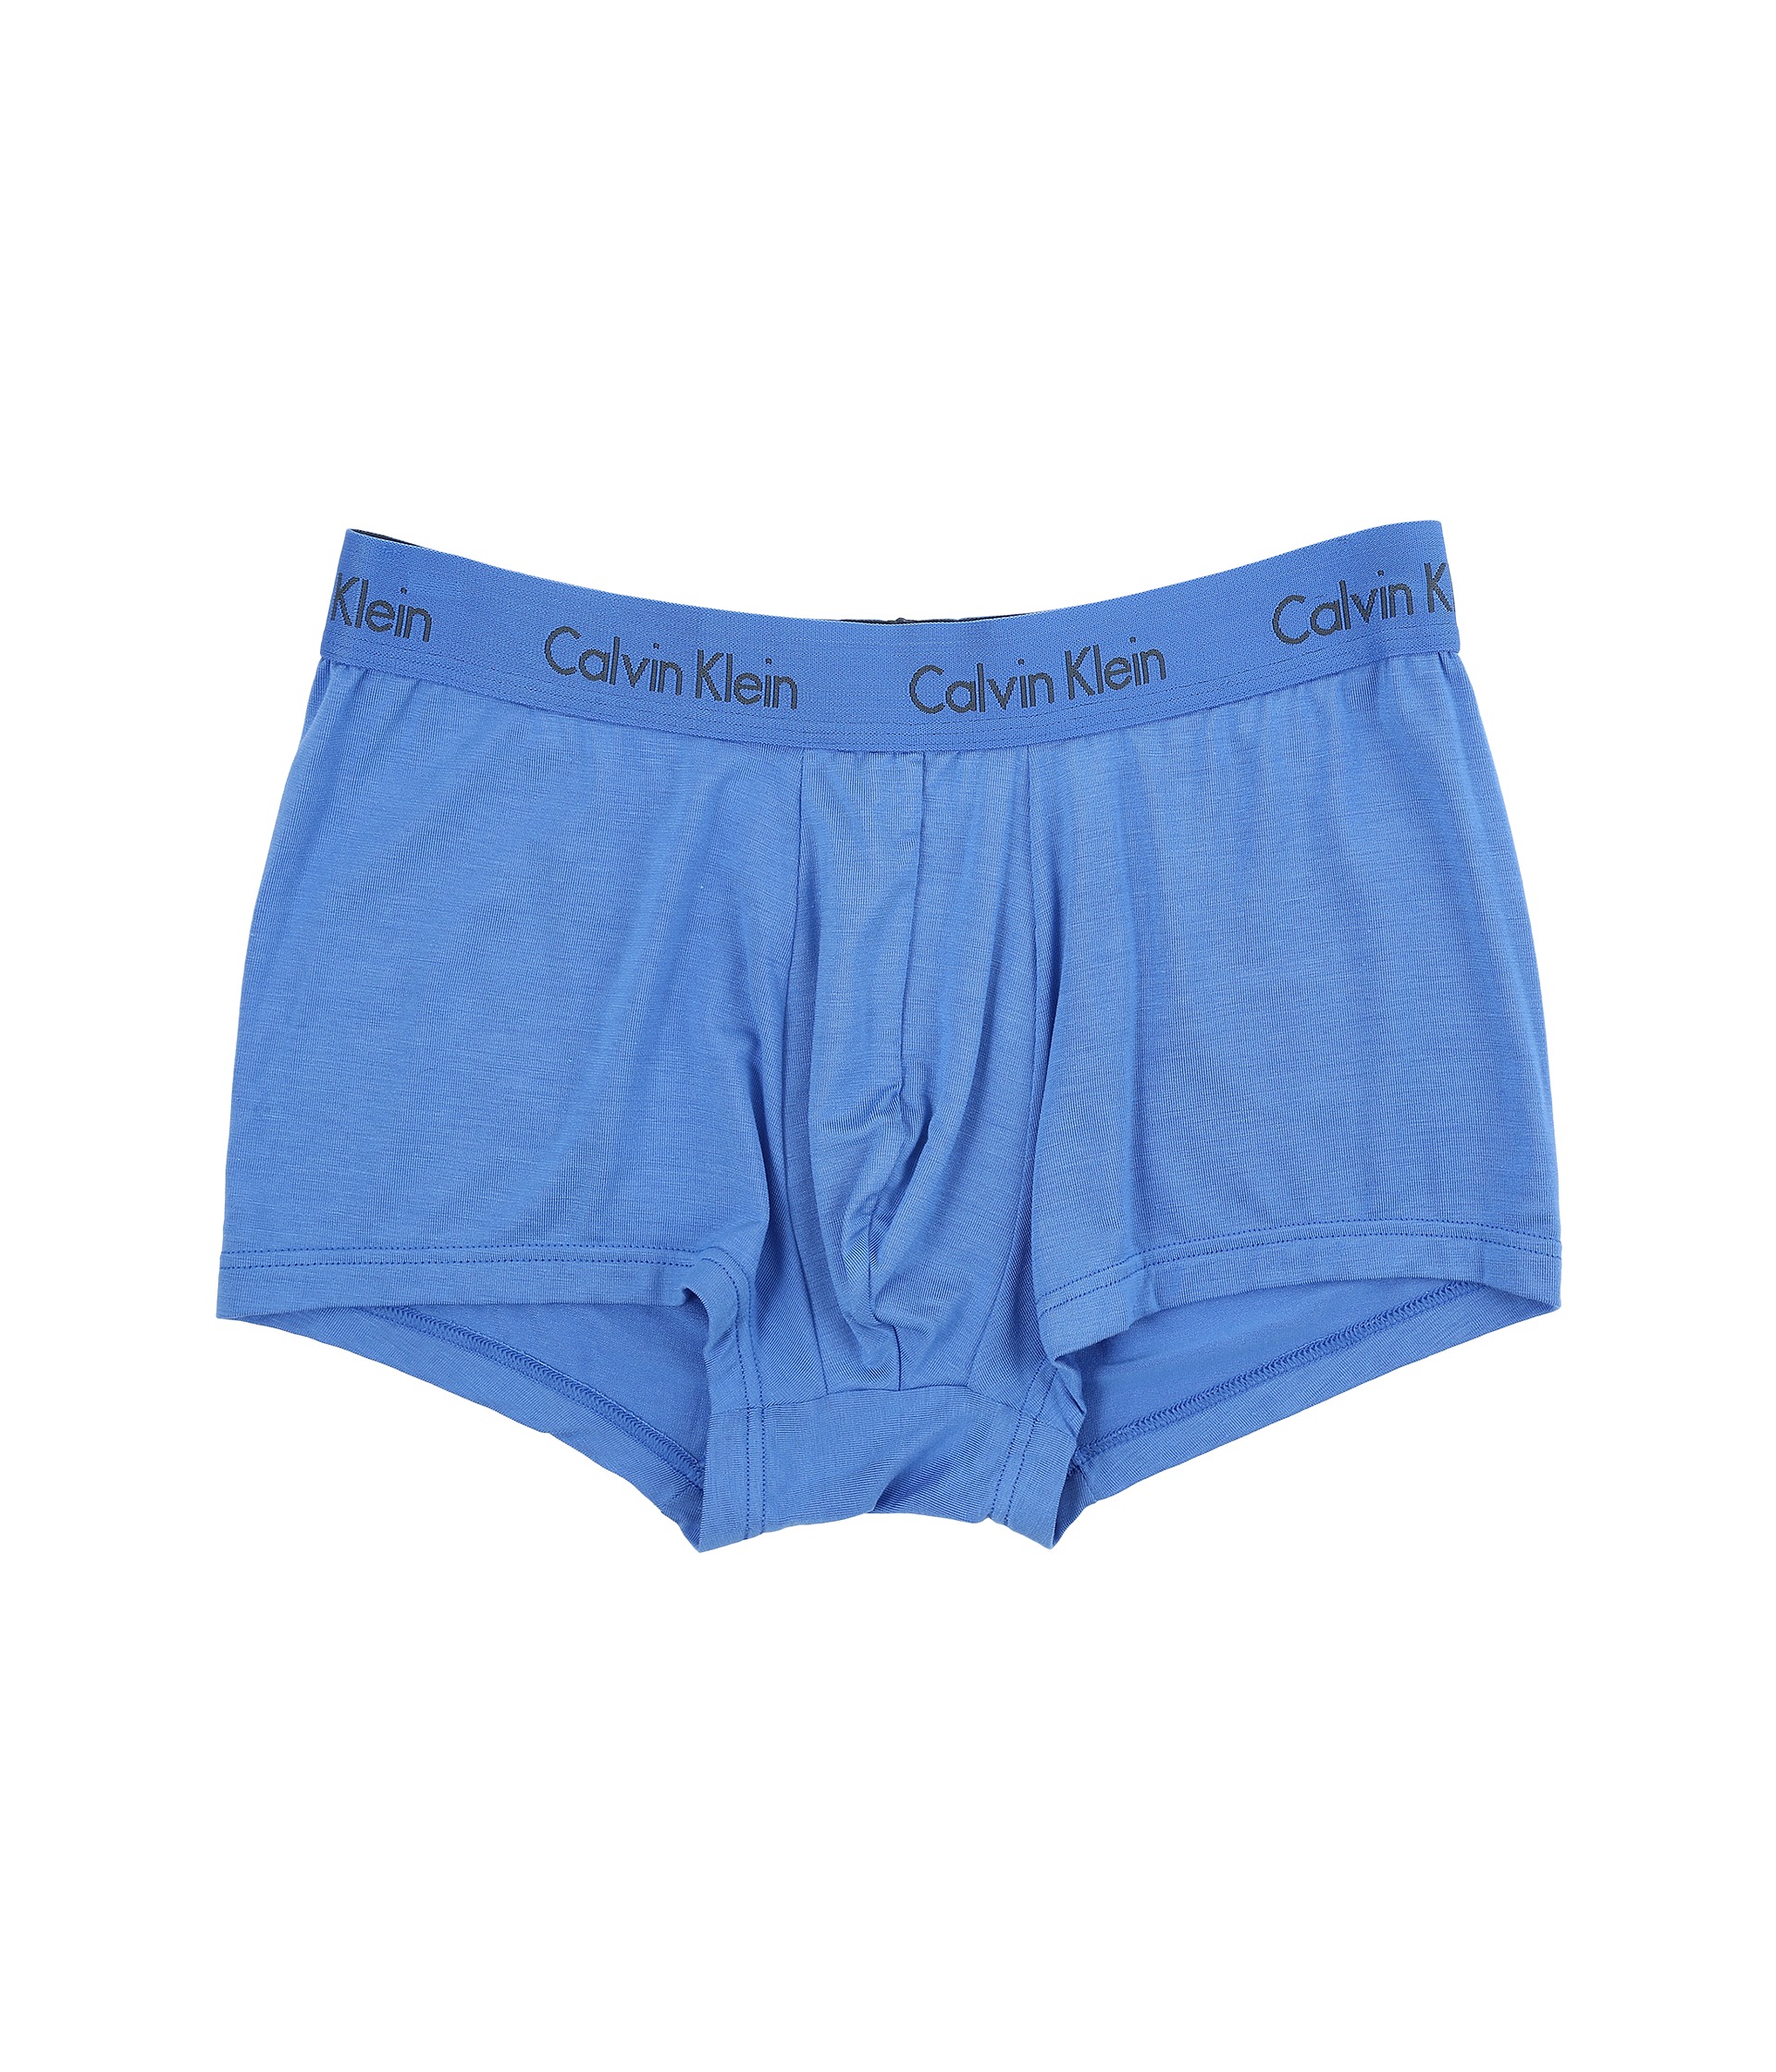 Calvin Klein Underwear Micro Modal Trunk U5554 - Zappos.com Free ...